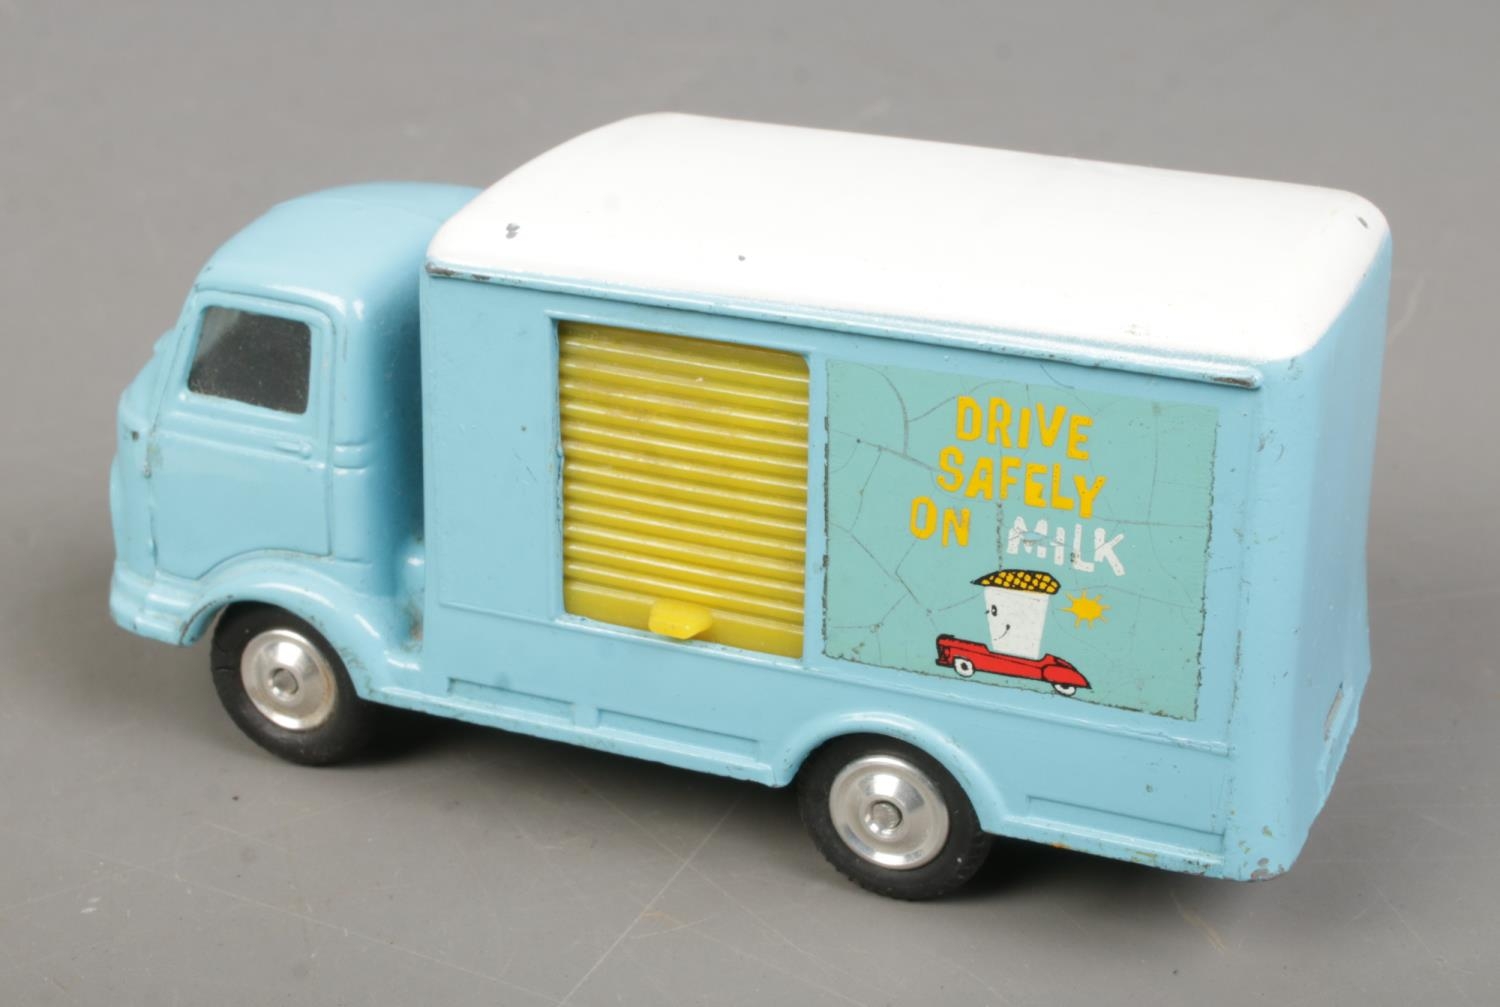 A Corgi Dunlop /Milk Marketing Board promotional Karrier Bantam featuring the slogan 'Drive Safely - Image 2 of 3